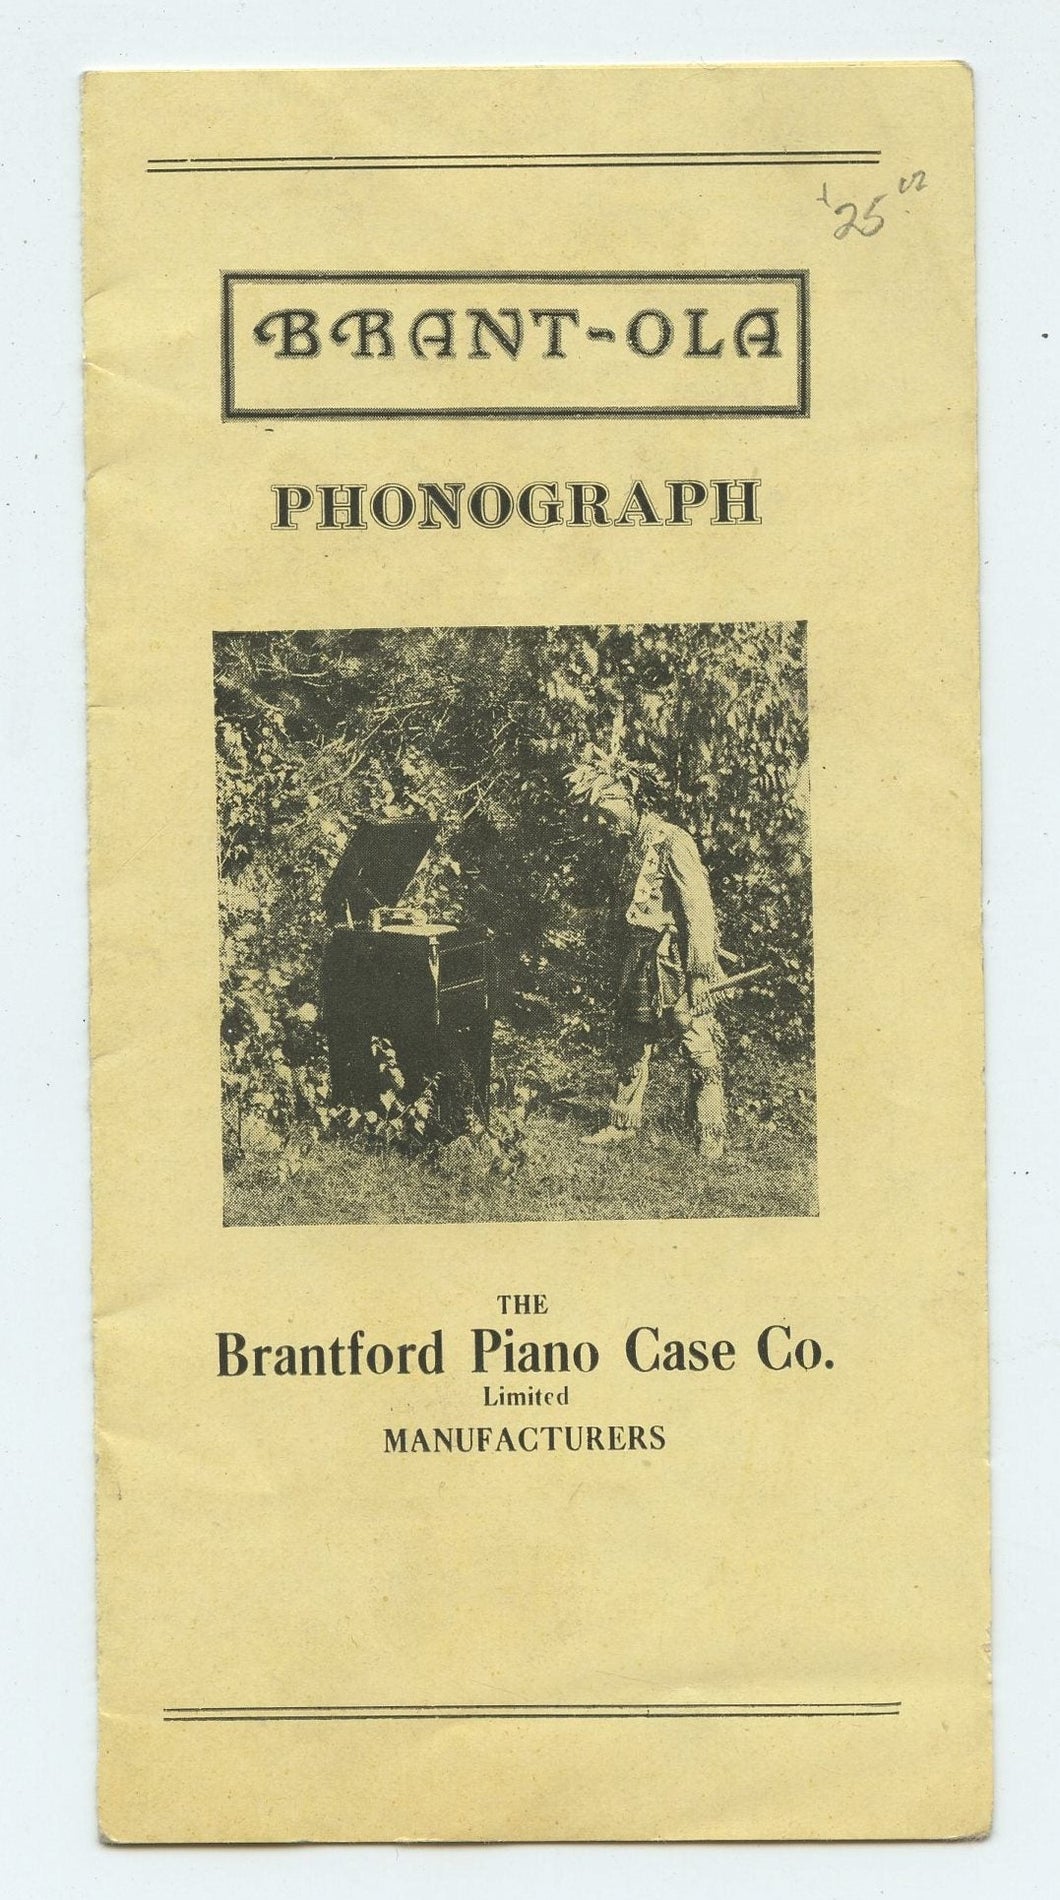 Brant-ola Phonograph flyer